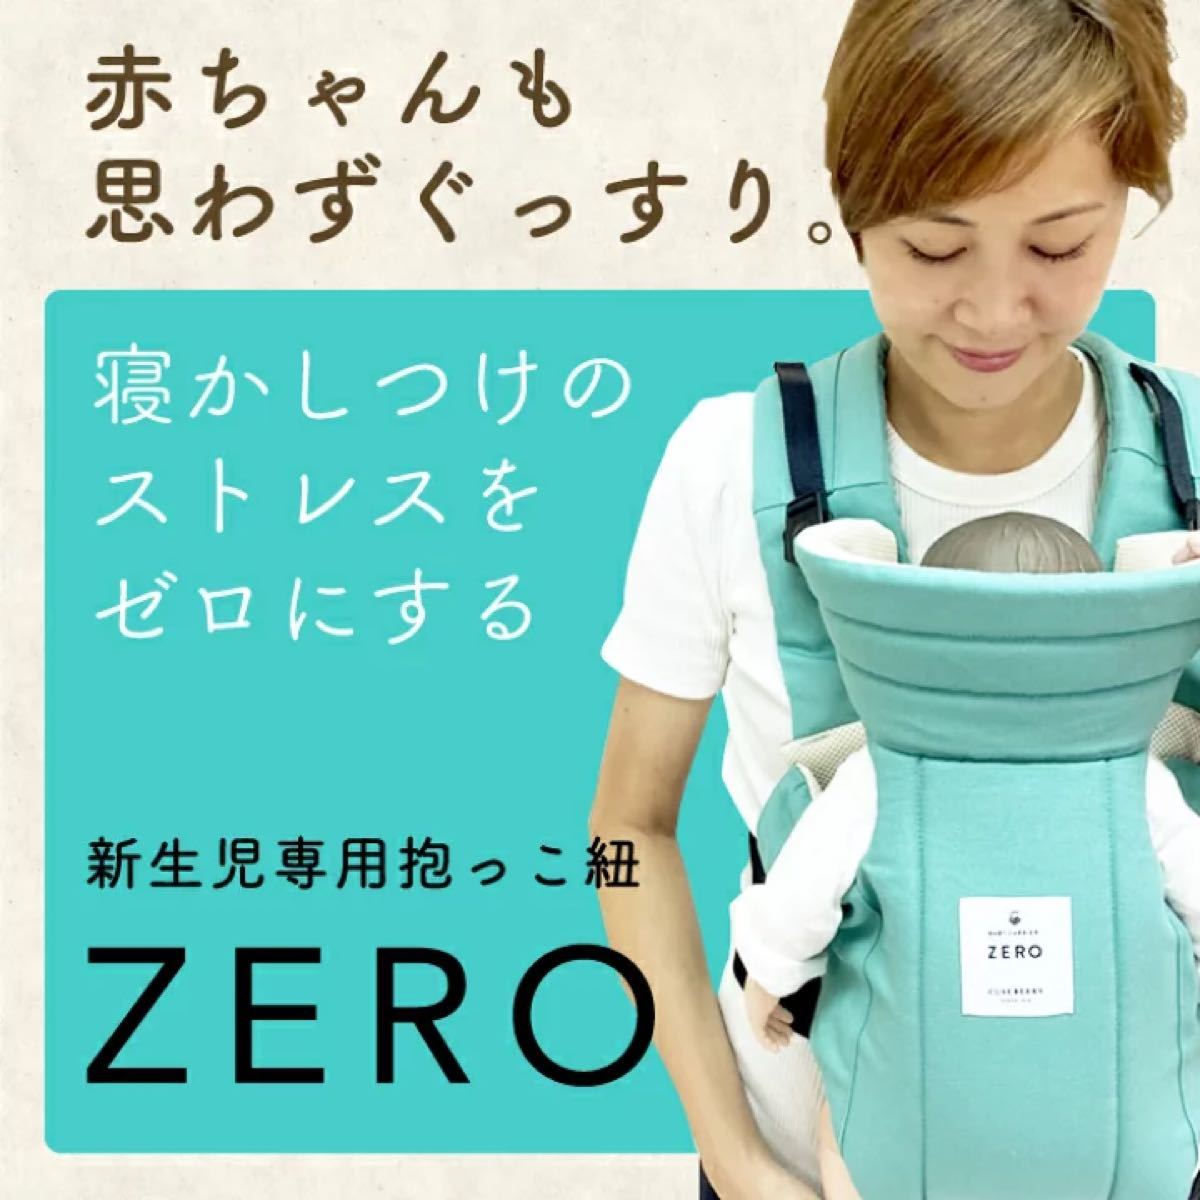 ZERO フリーサイズ 新生児 抱っこ紐 日本製 キューズベリー CUSE BERRY